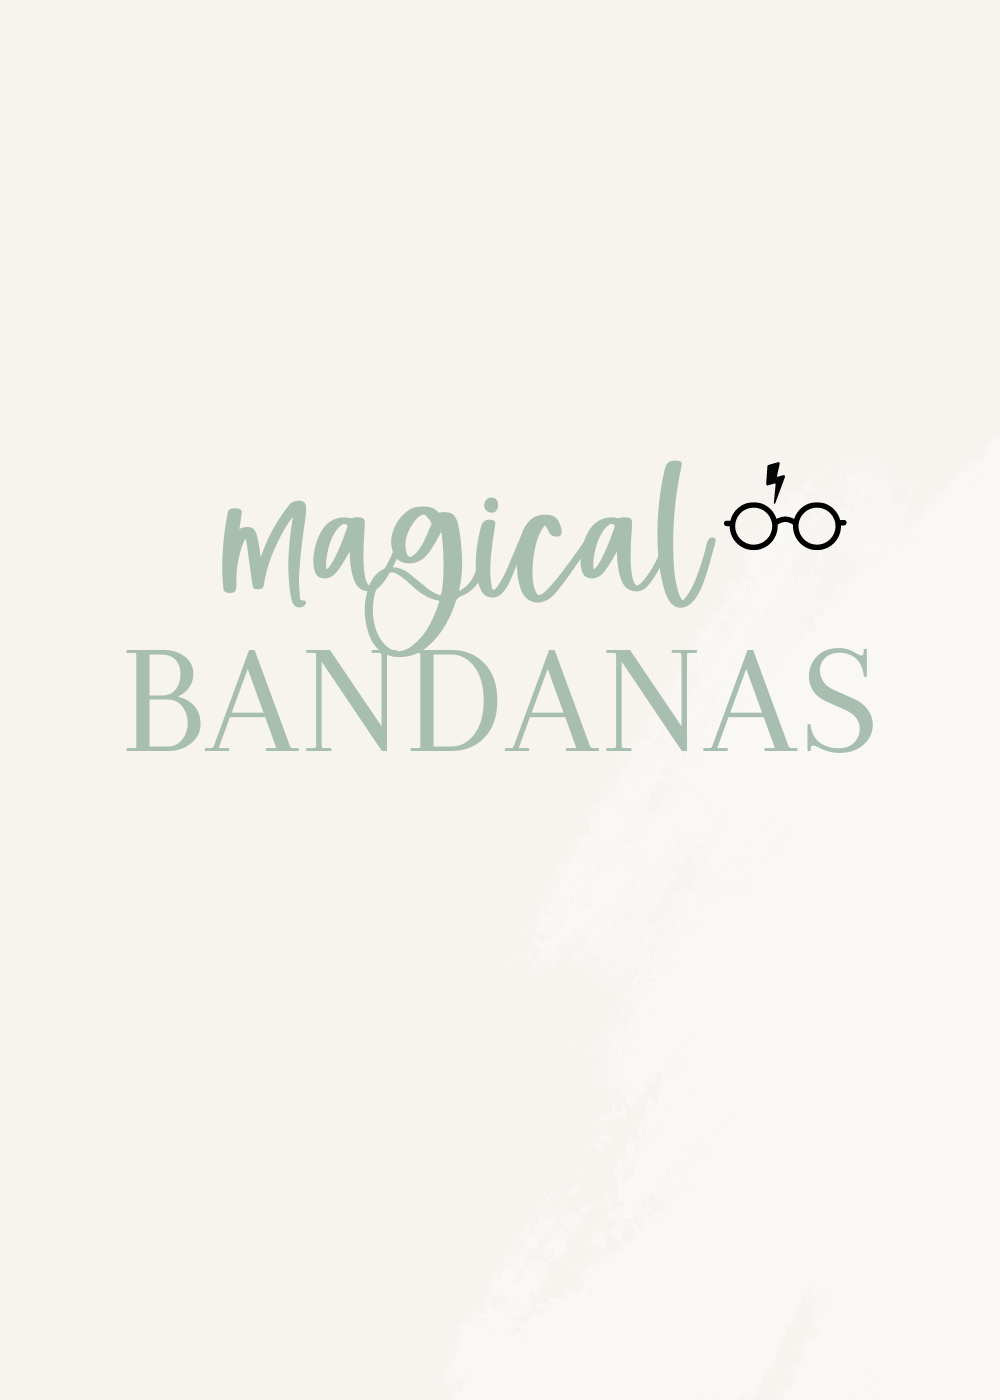 Magical bandanas